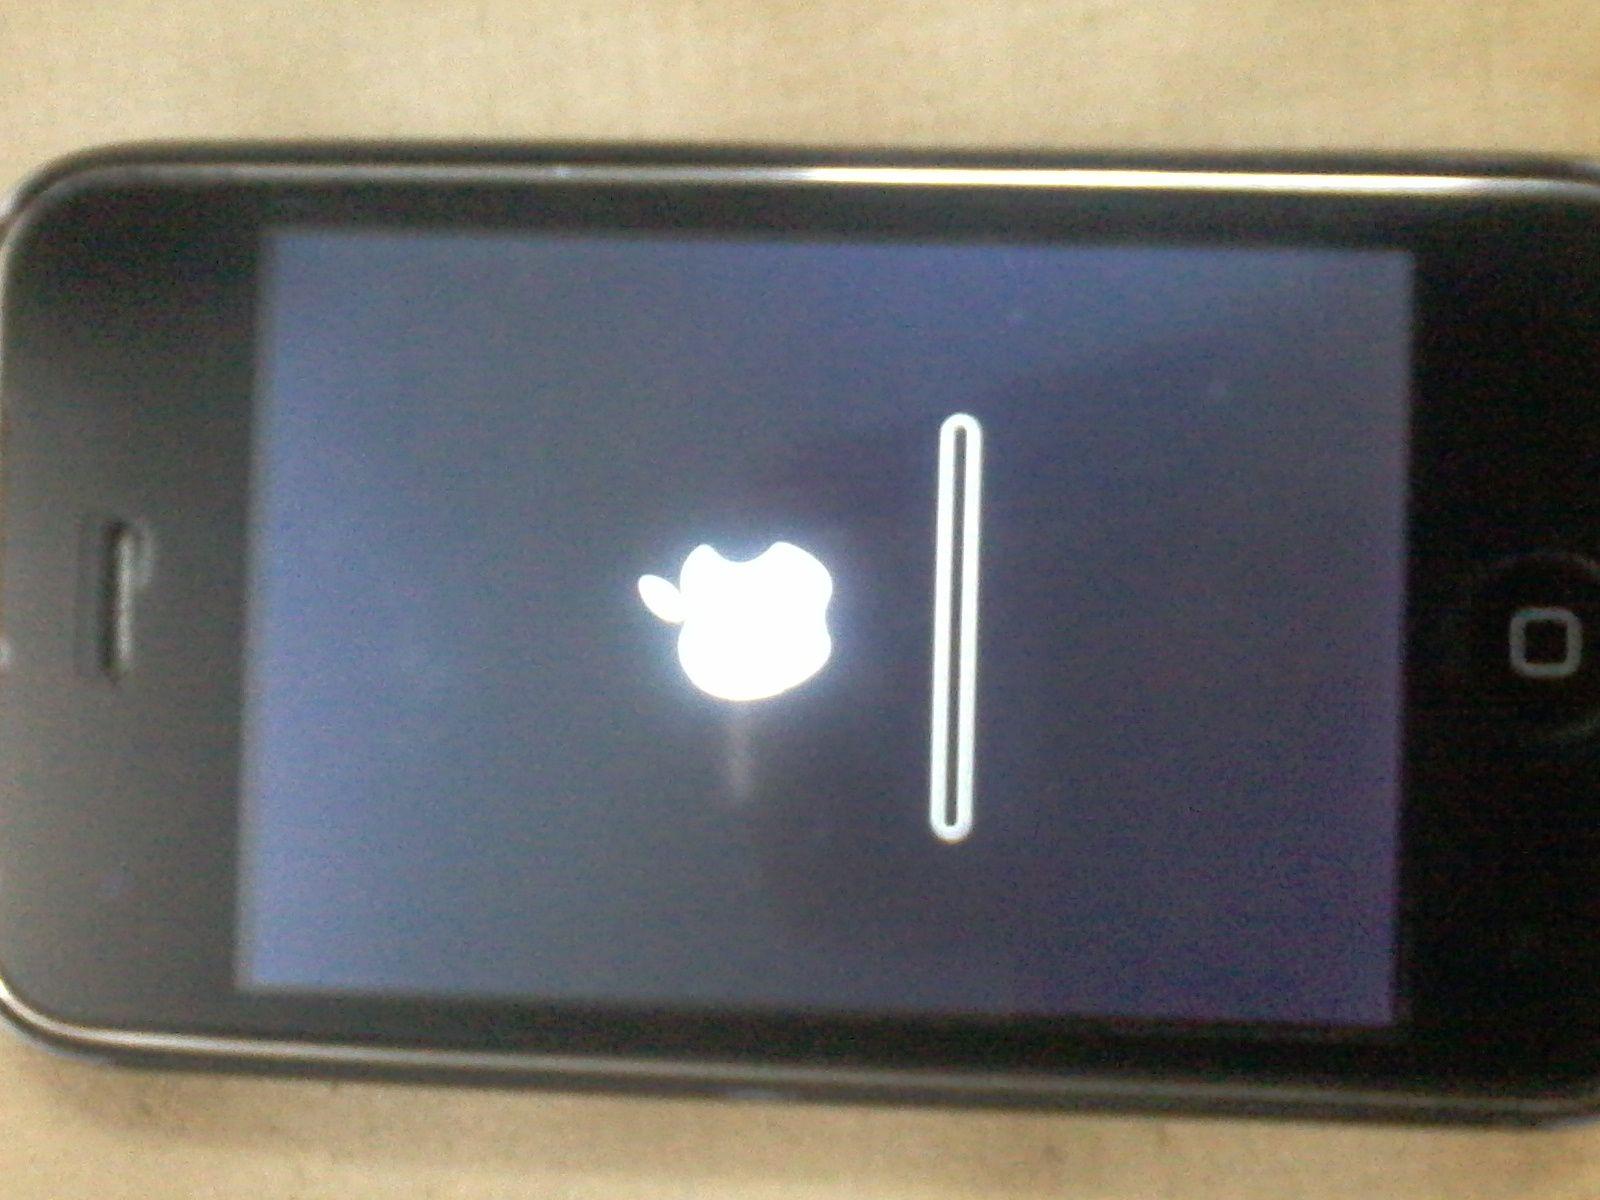 Apple Settings Logo - jailbroken iphone 3gs stuck on progress bar and apple logo after